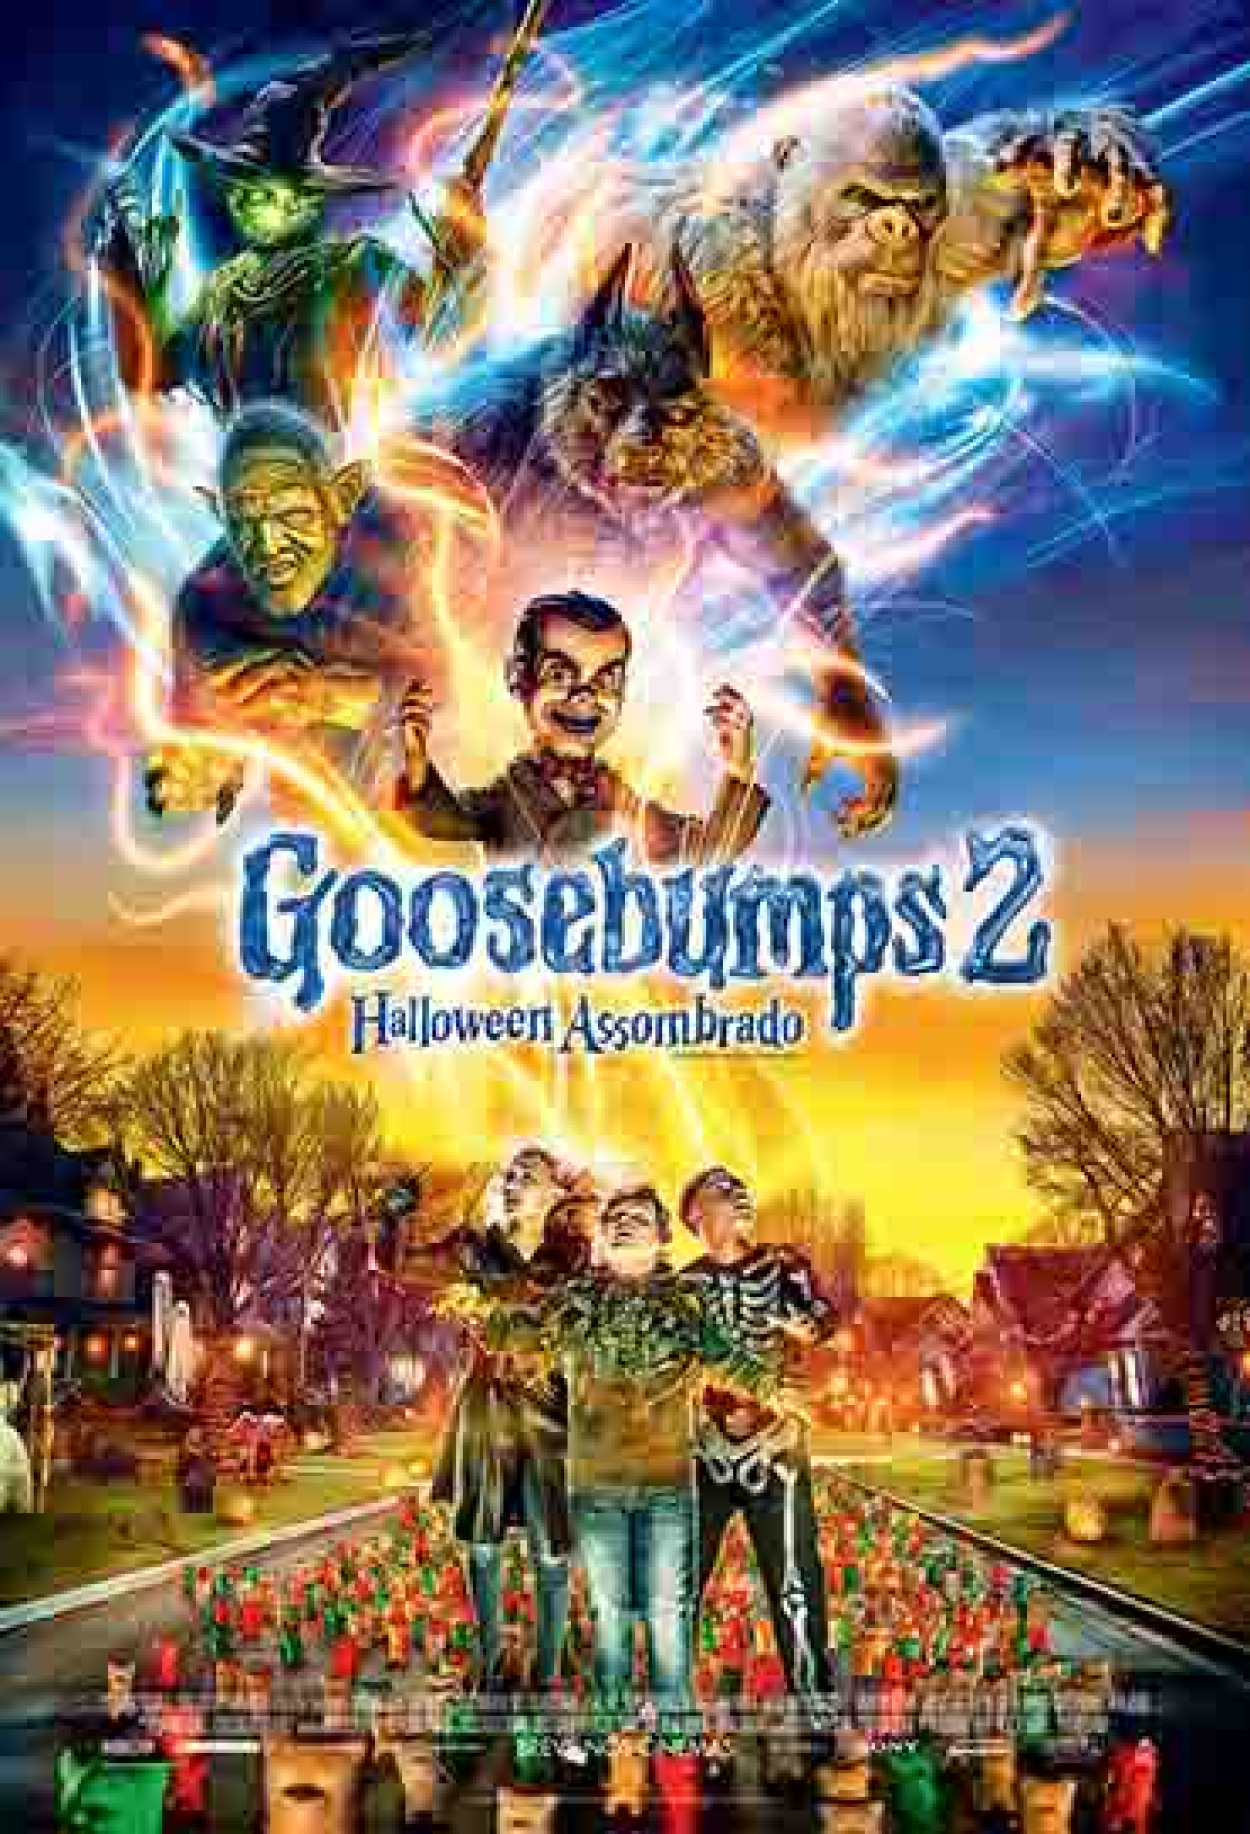 Goosebumps 2 - Halloween Assombrado (Filme), Trailer, Sinopse e  Curiosidades - Cinema10